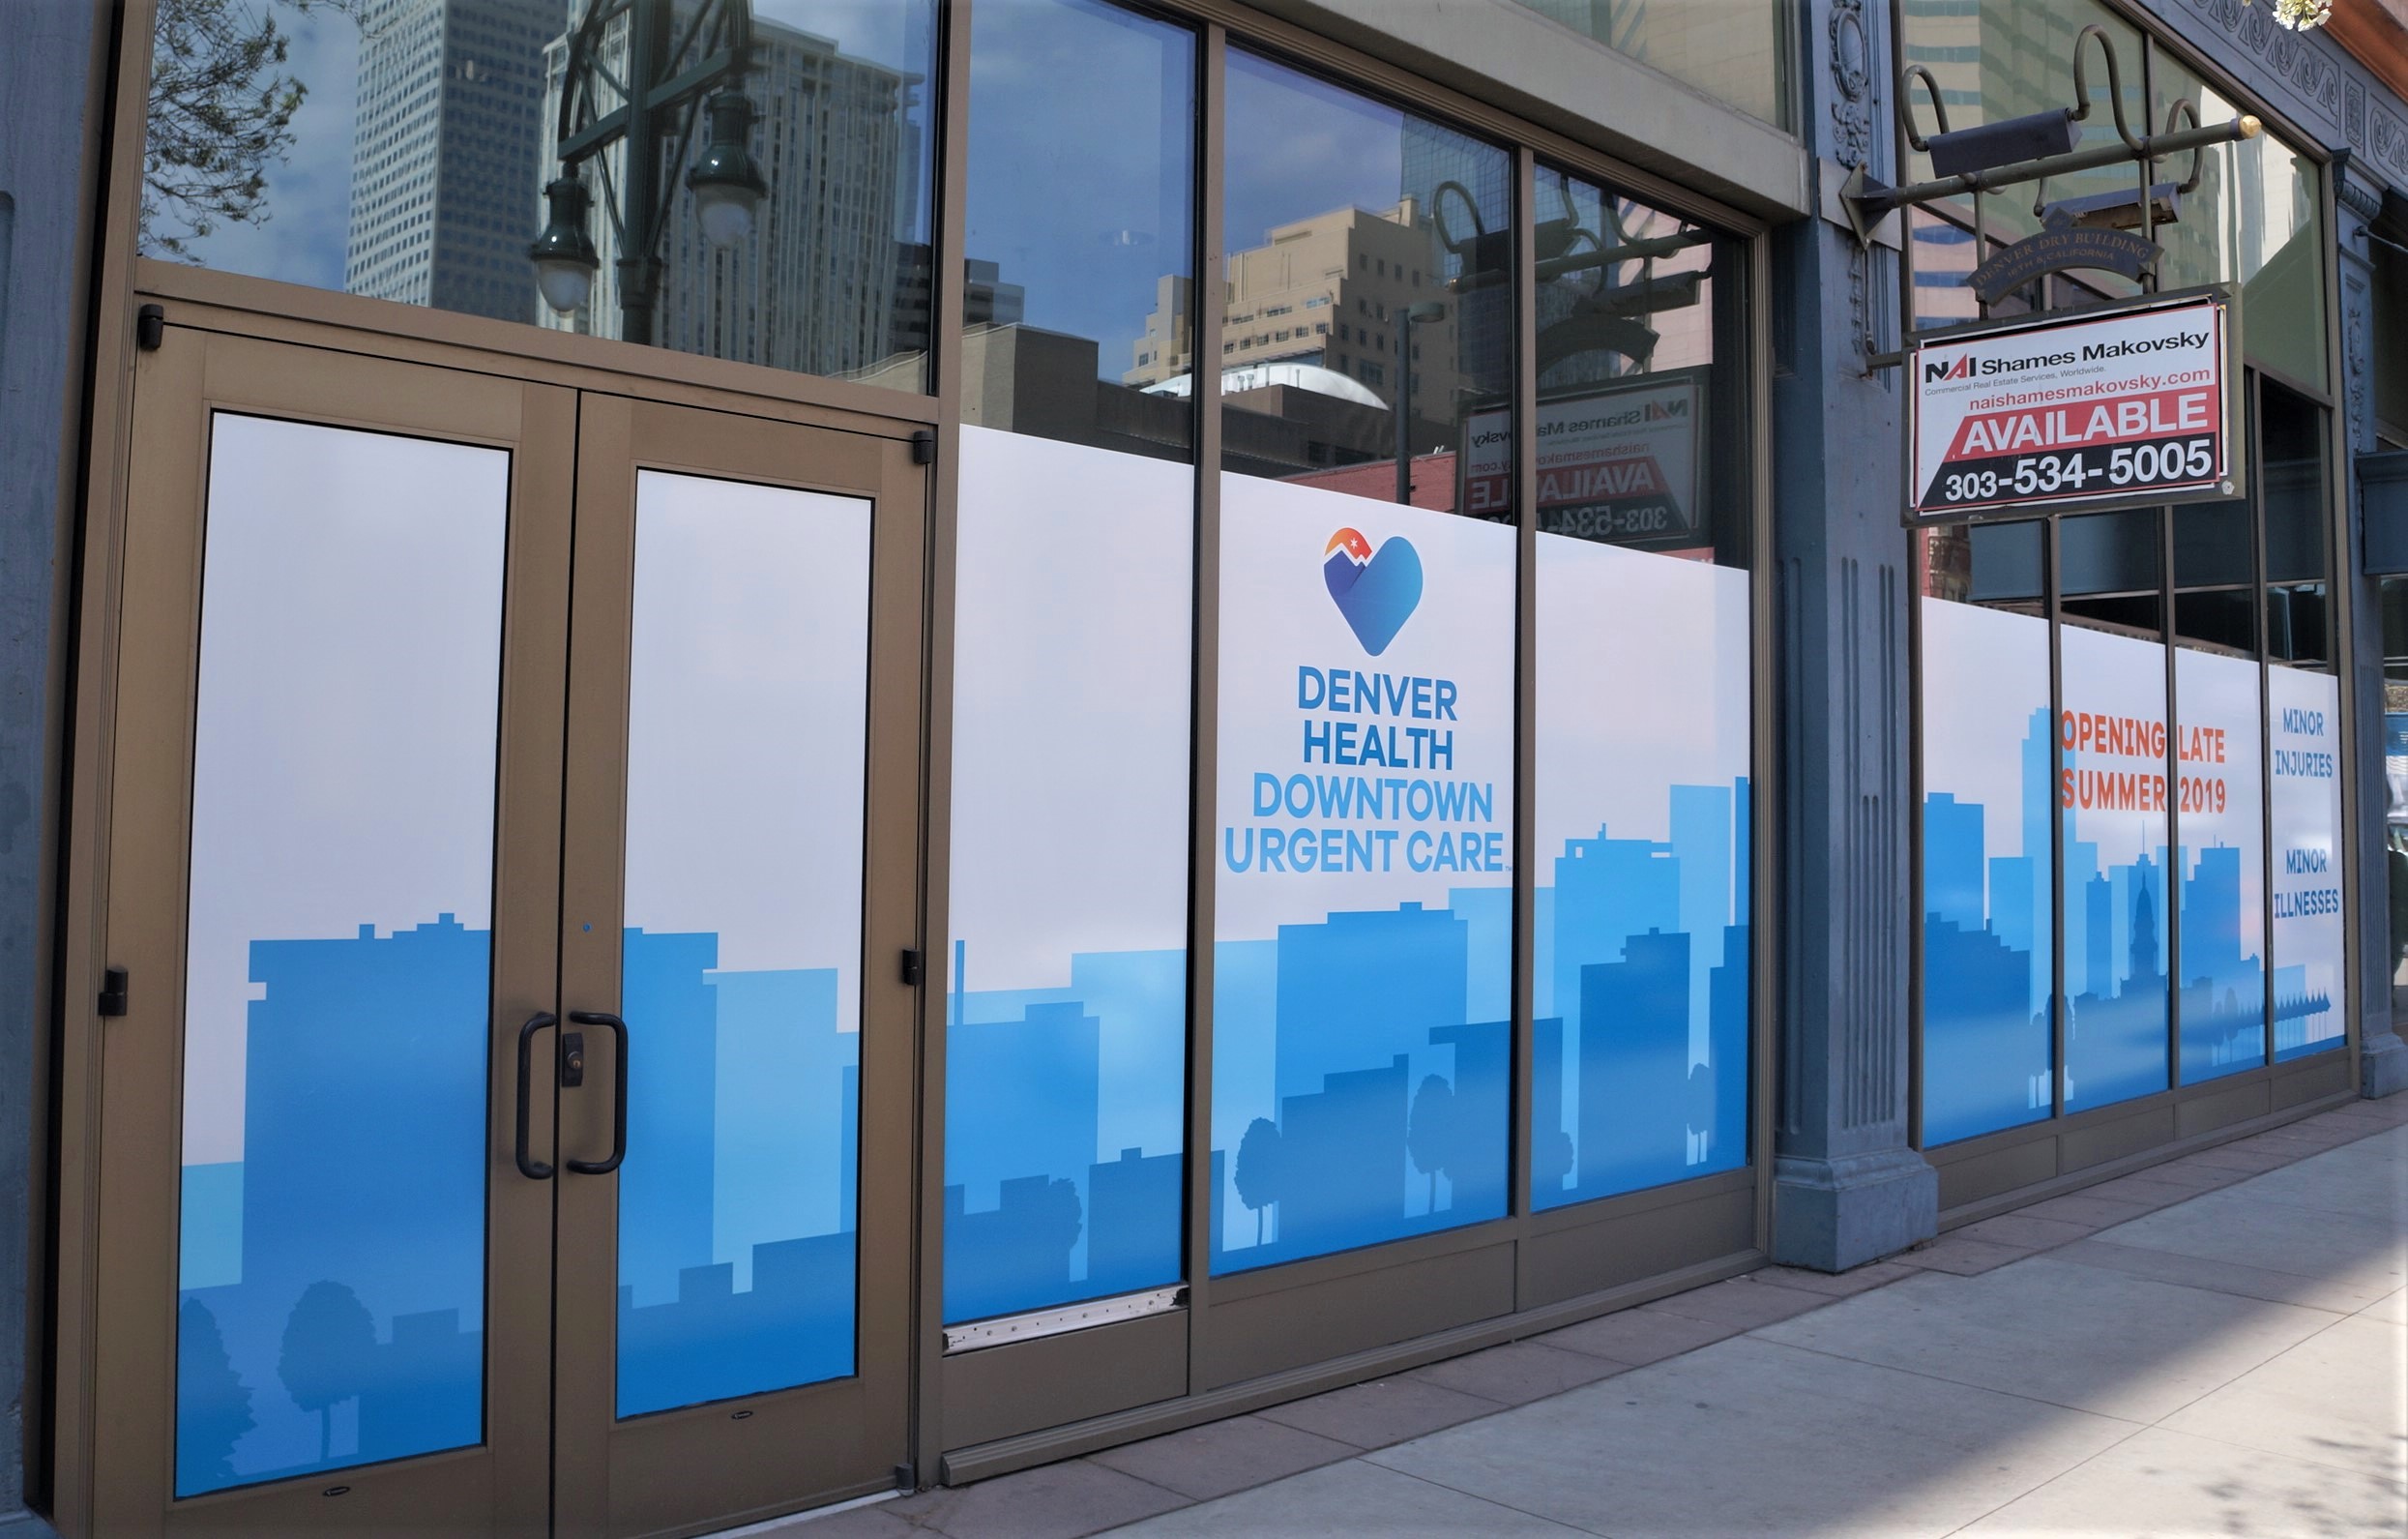 Denver Health to open urgent care facility near 16th ...